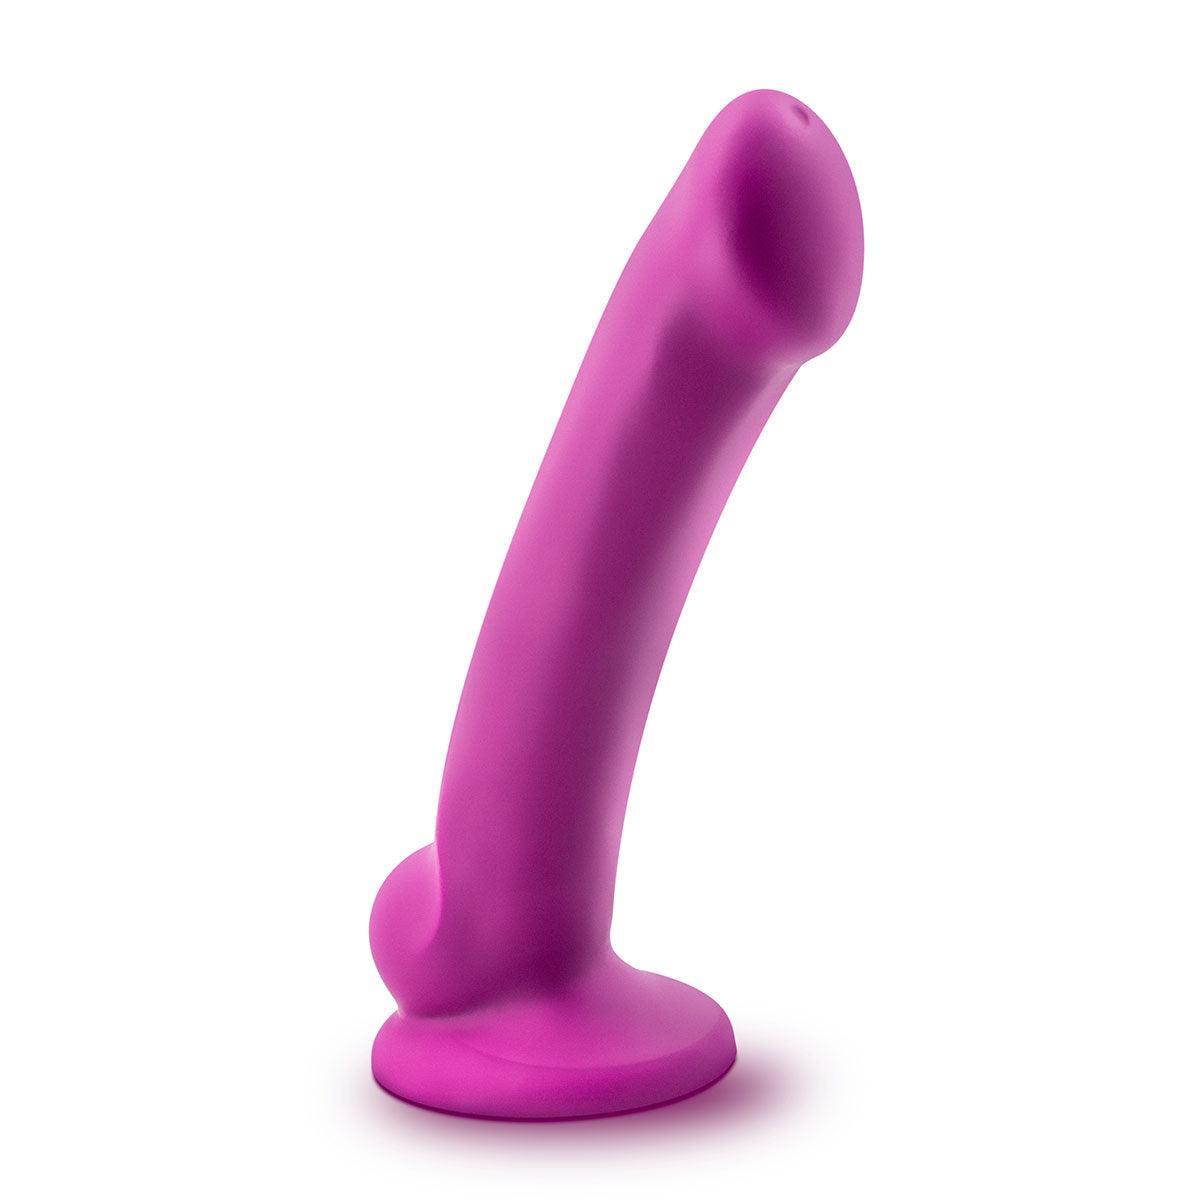 Avant D9 - Ergo MINI Violet - Buy At Luxury Toy X - Free 3-Day Shipping